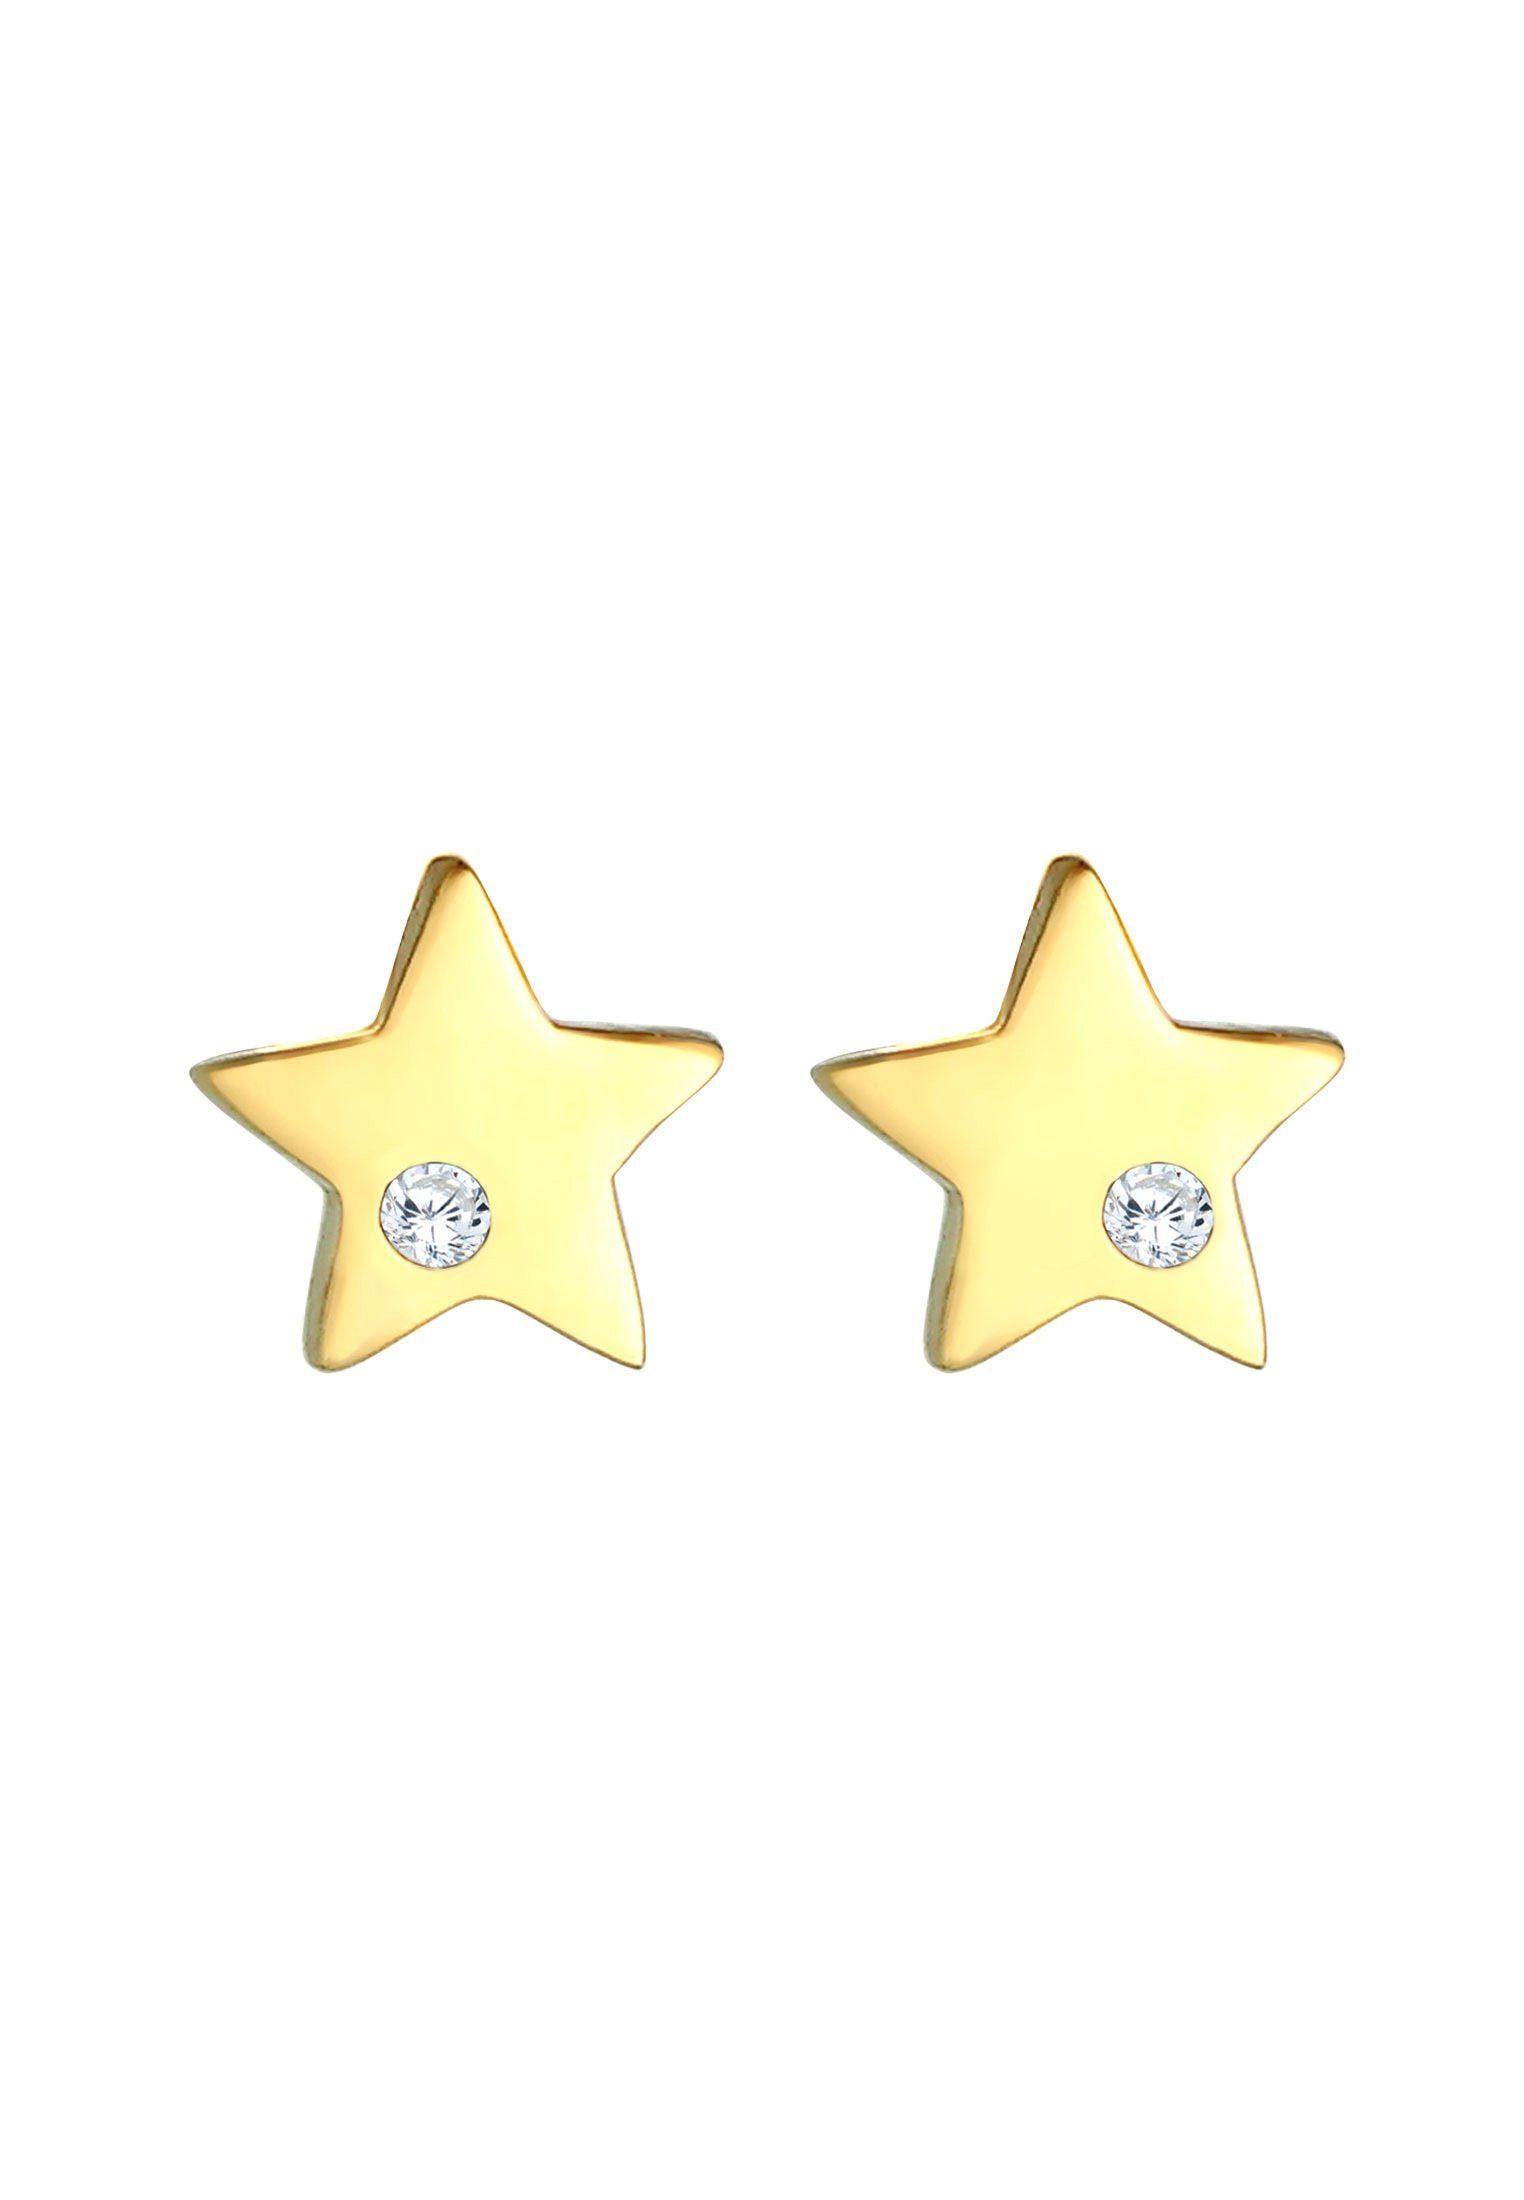 Zirkonia Gold Paar Silber Sterne Kinder Elli Astro Ohrstecker 925